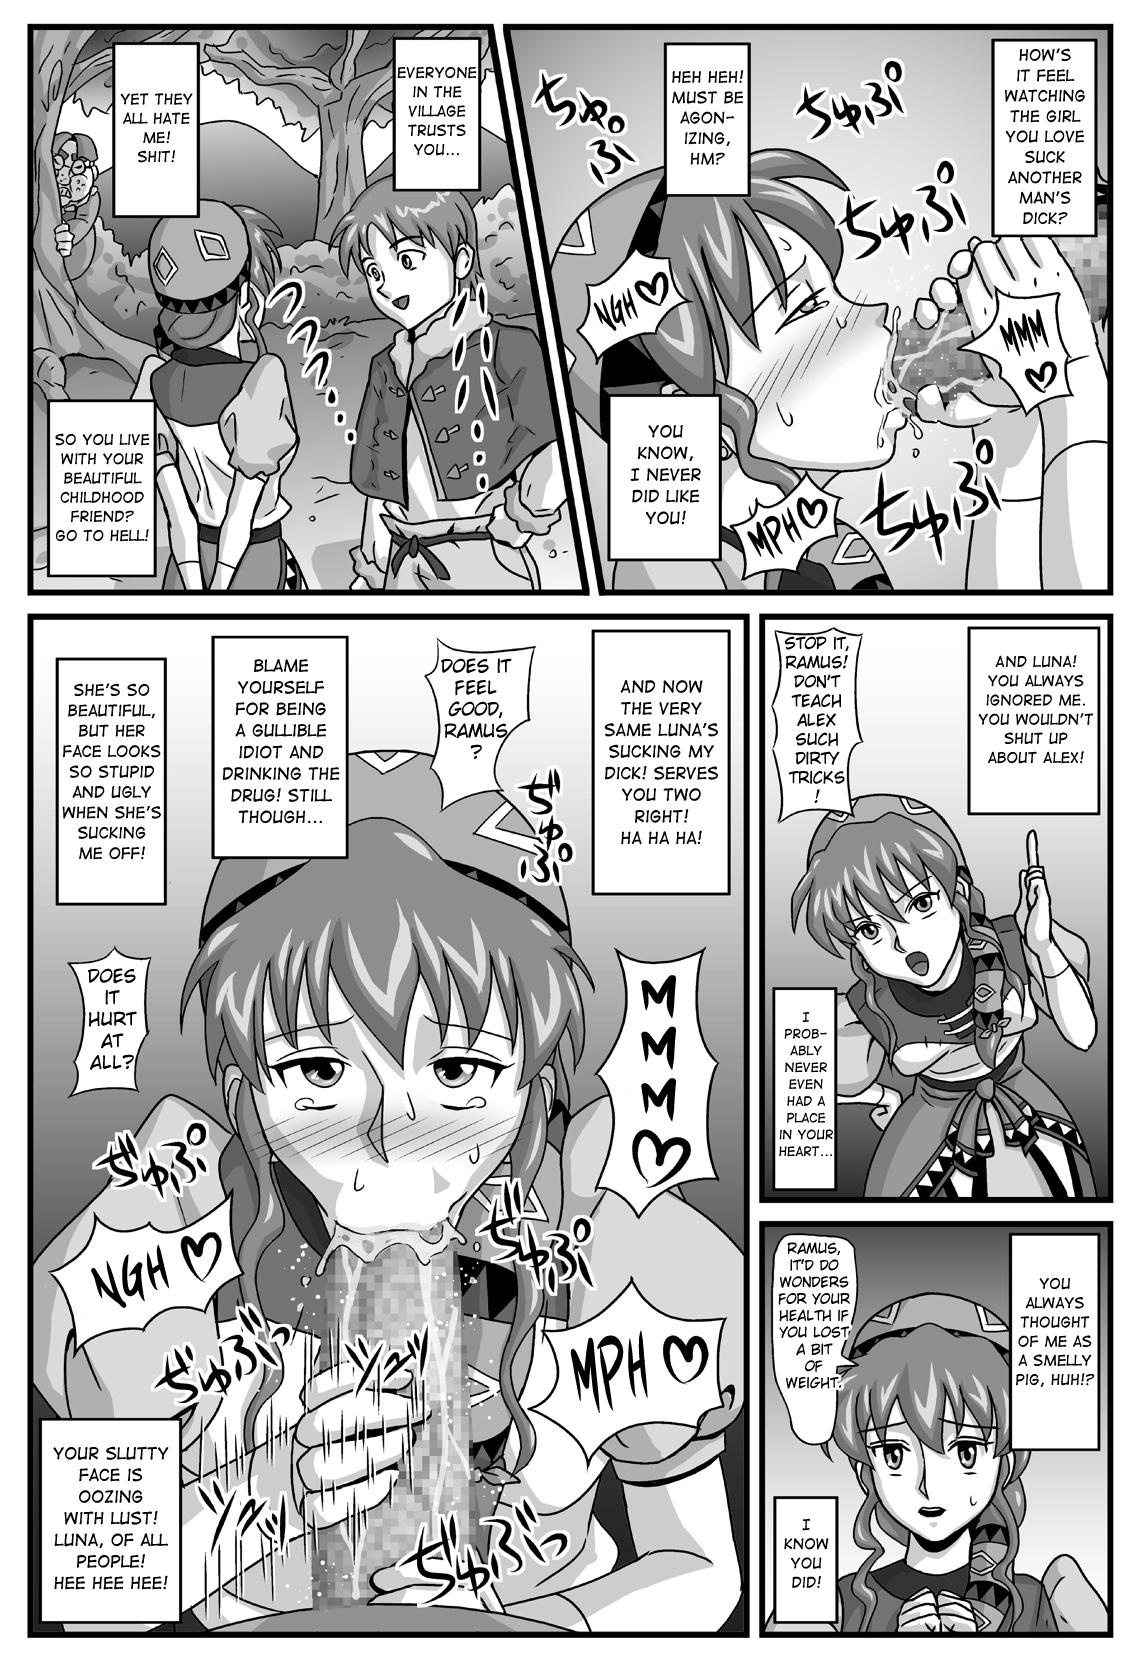 Swedish The Cumdumpster Princess of Burg 01 - Lunar silver star story Anime - Page 9